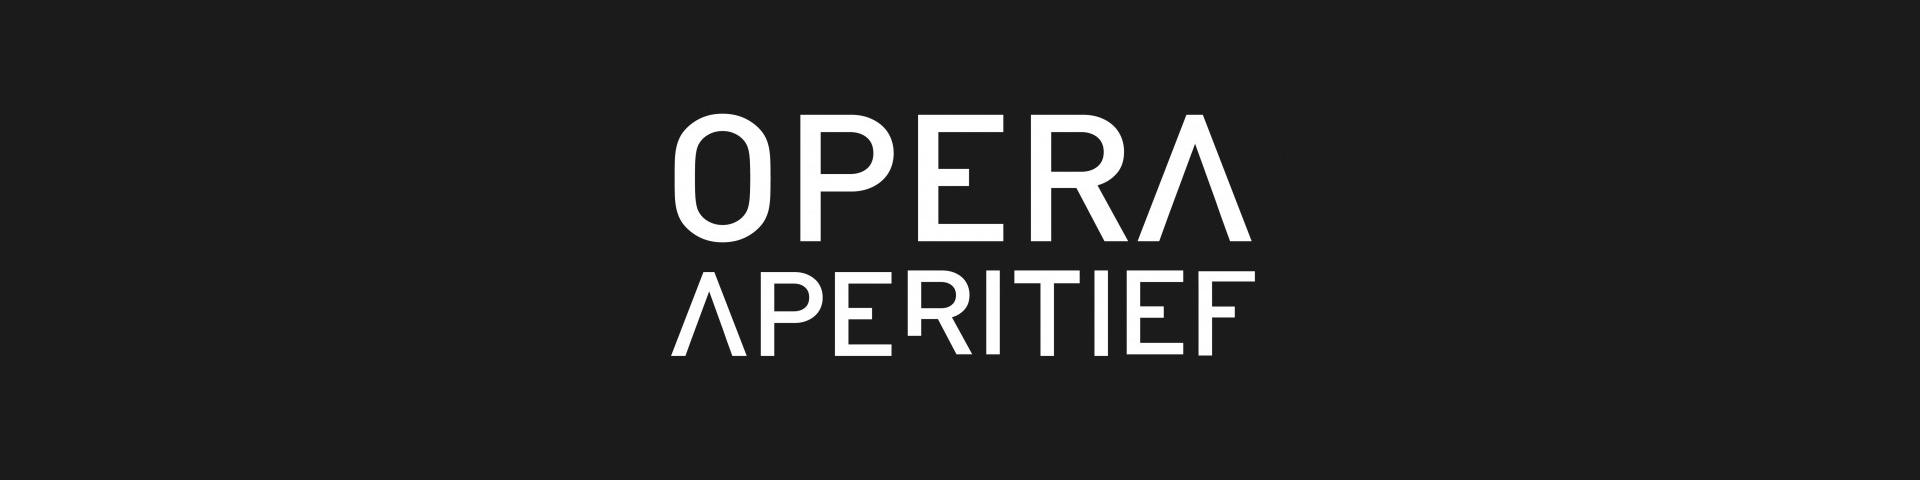 Opera Aperitief - Nederlandse Reisopera